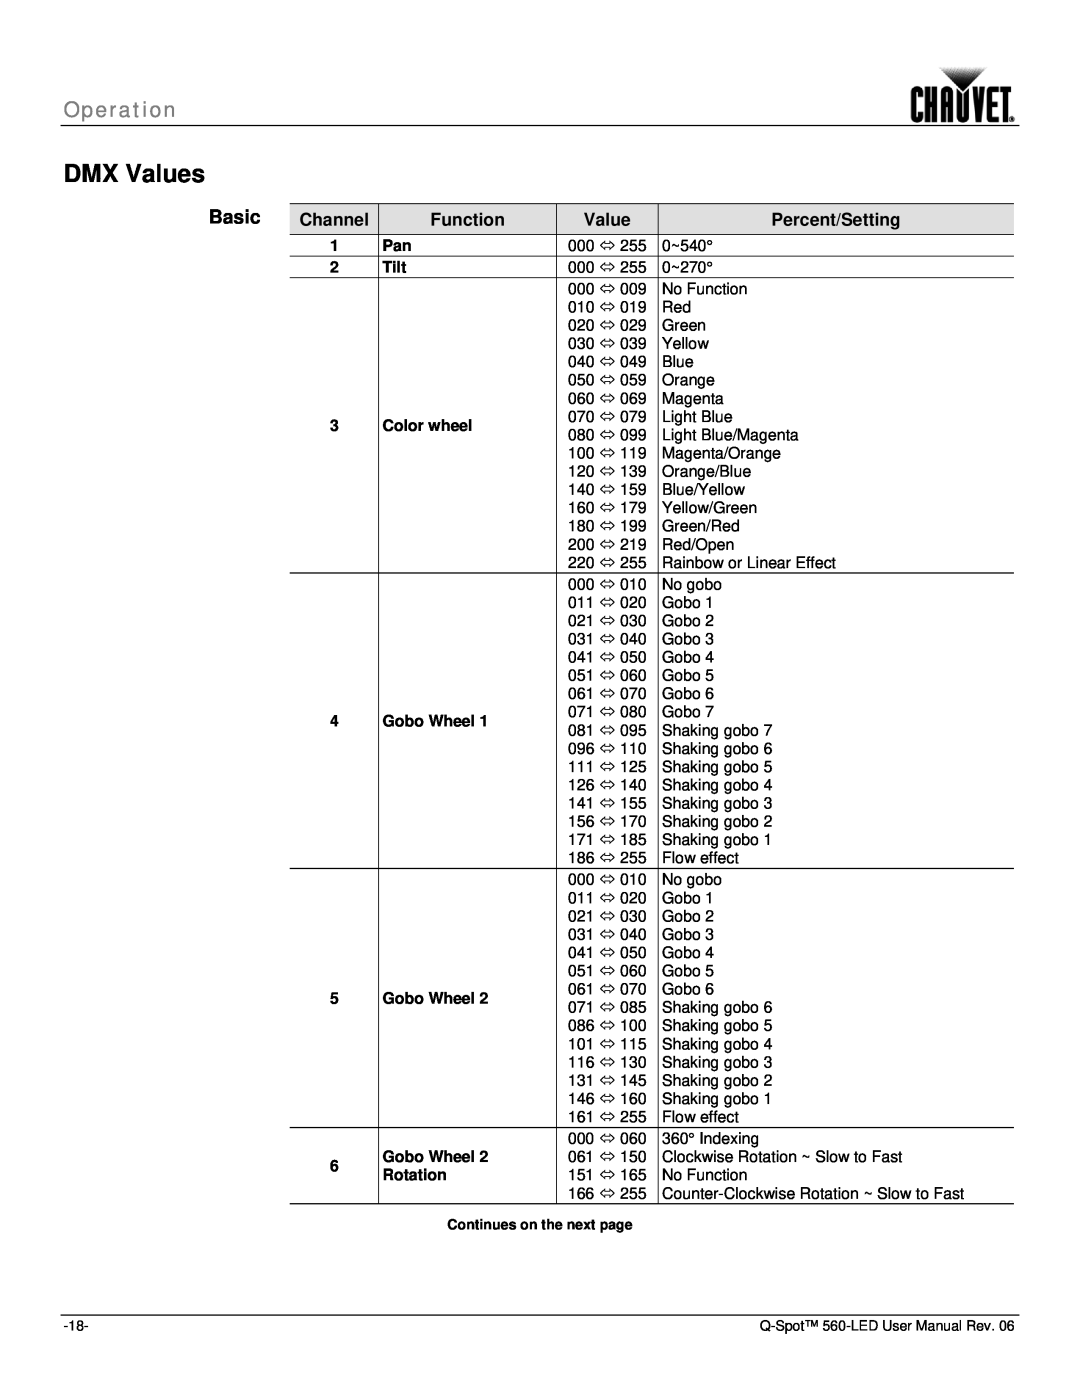 Chauvet 560 user manual DMX Values, Basic, Operation 